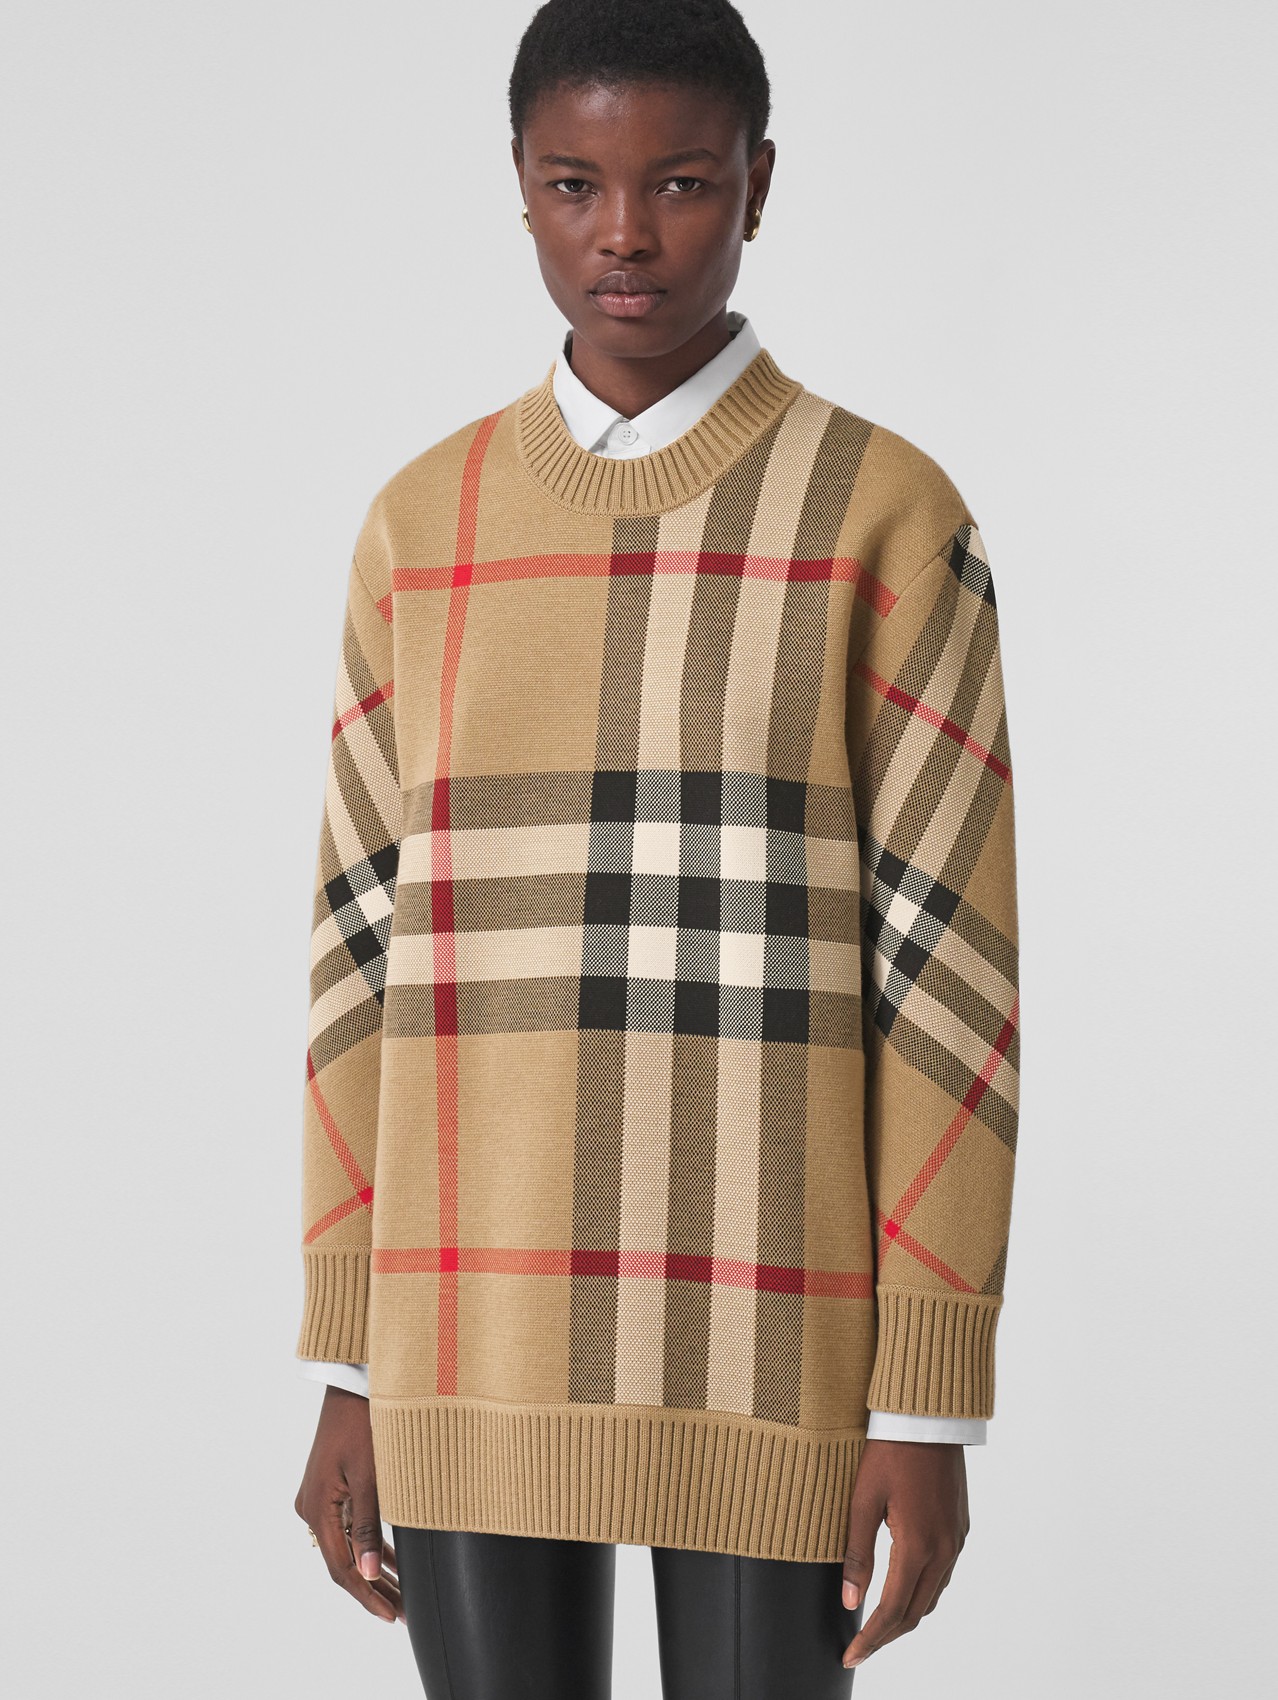 Suéter de lã tecnológica com xadrez em jacquard in Bege Clássico